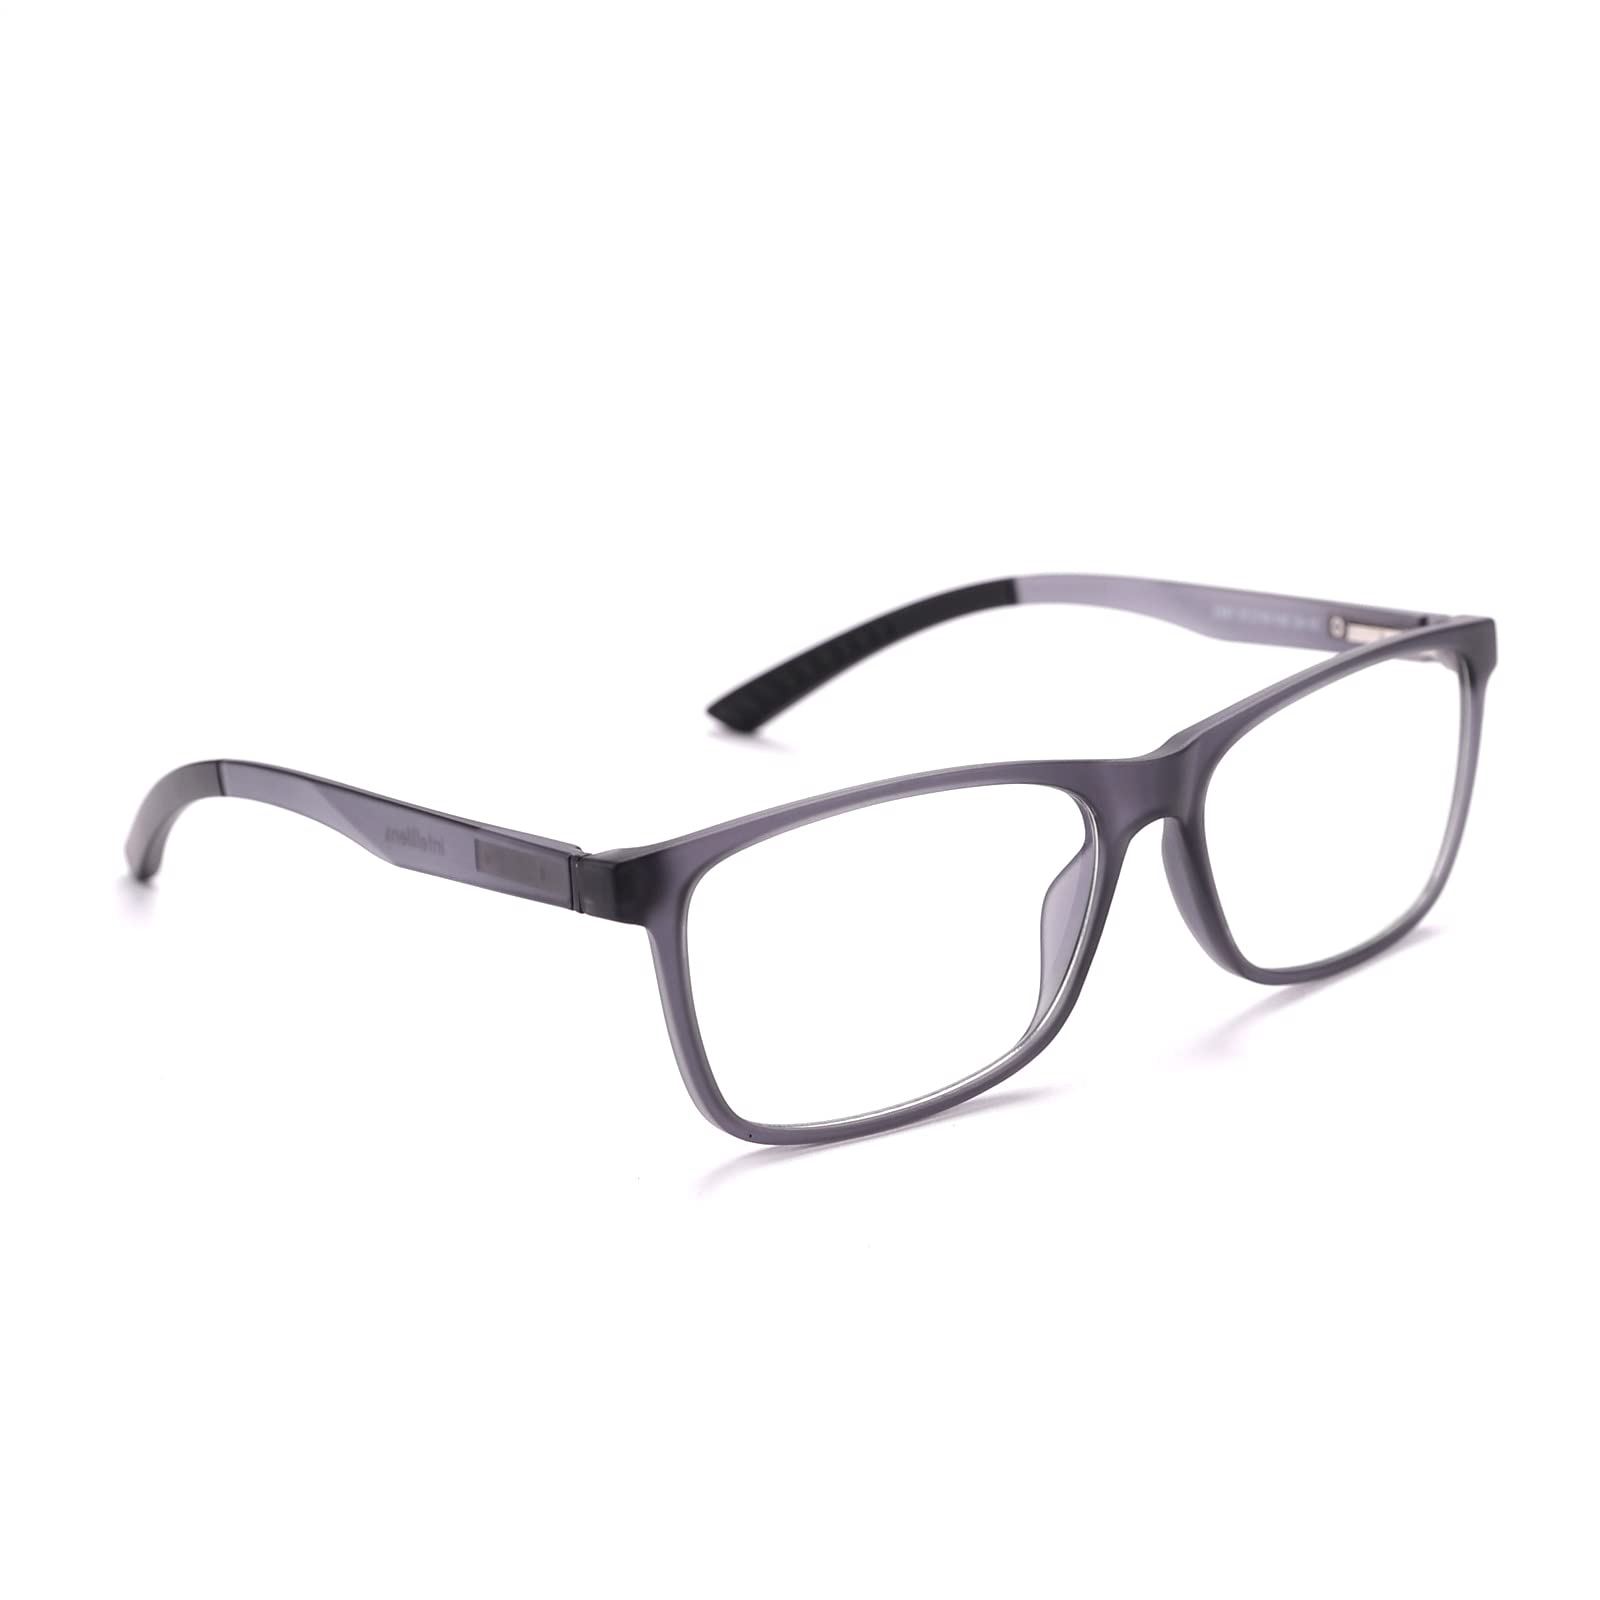 Intellilens Square Blue Cut Computer Glasses for Eye Protection | Zero Power, Anti Glare & Blue Light Filter Glasses | UV Protection Eye Glass for Men & Women (Grey & Black) (54-17-135)